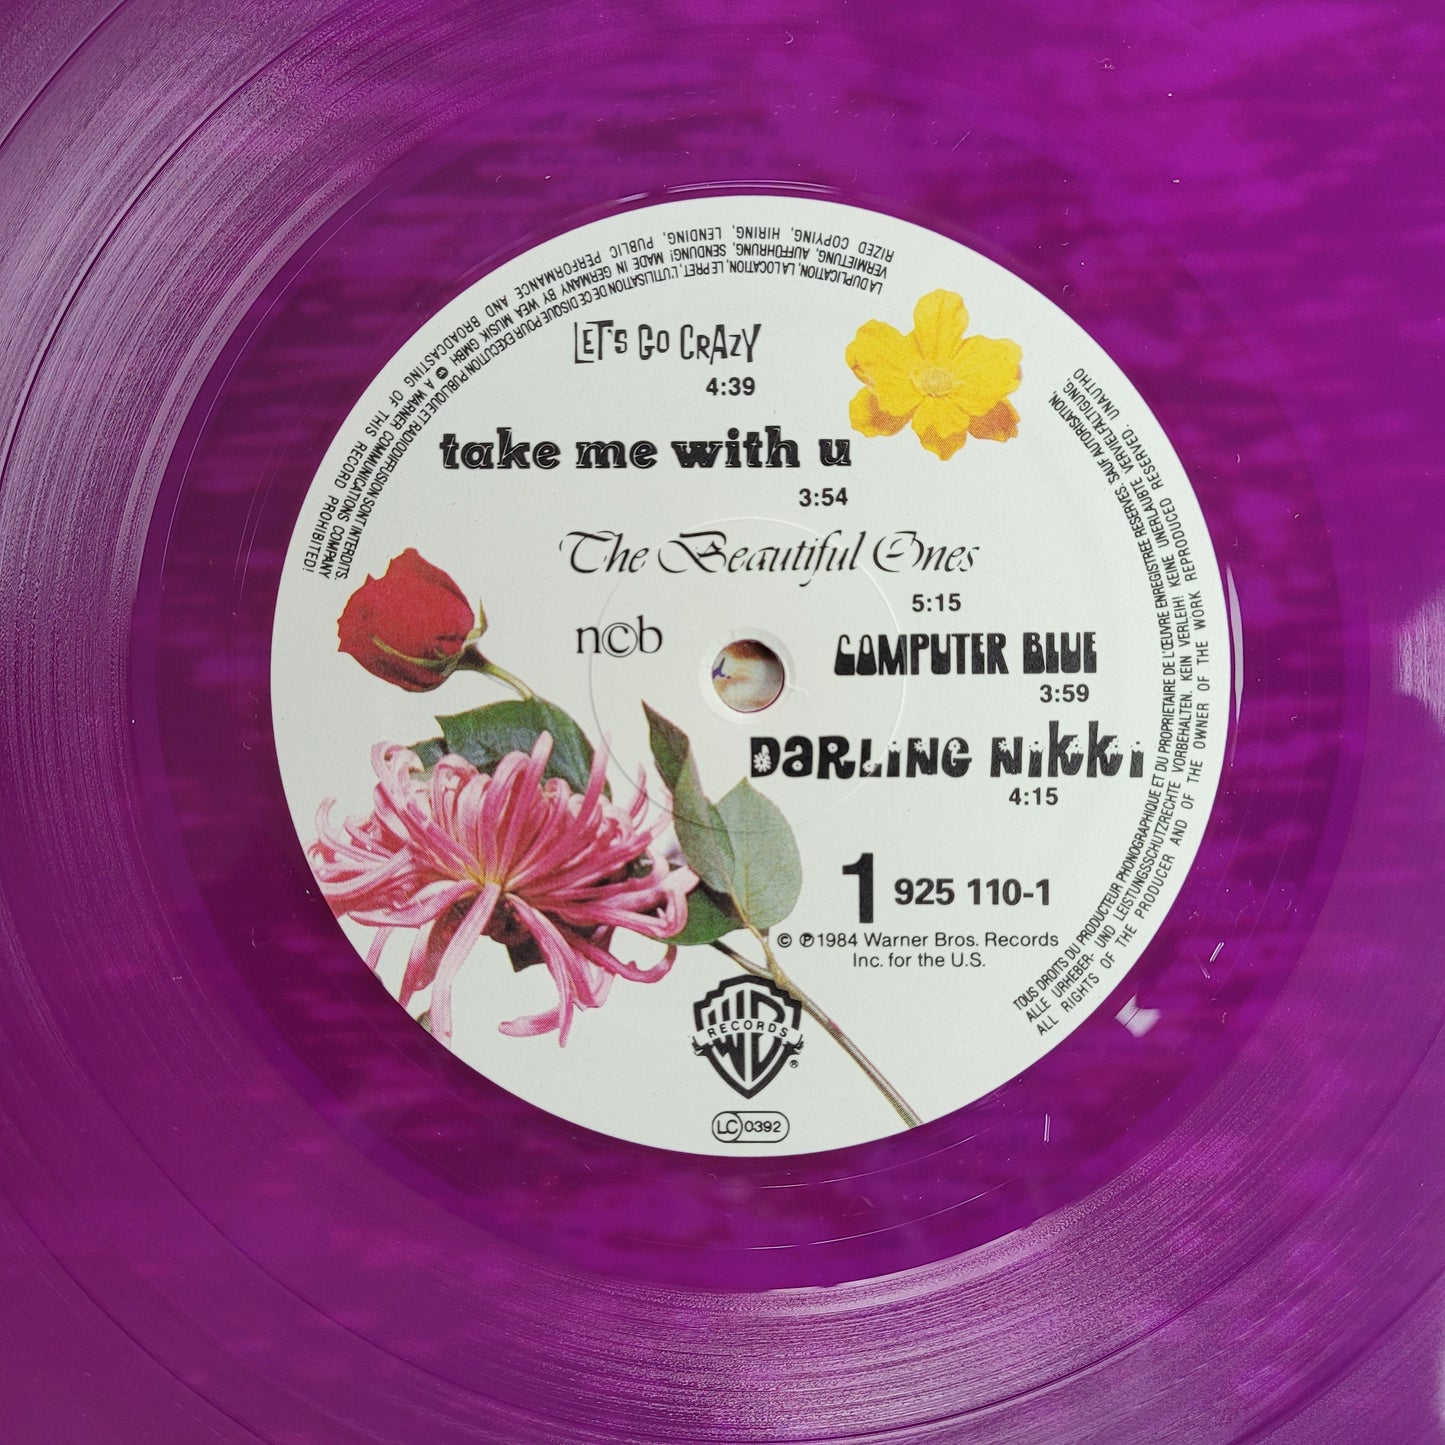 Prince, Purple Rain, Rare Limited Edition Purple Vinyl, LP Album